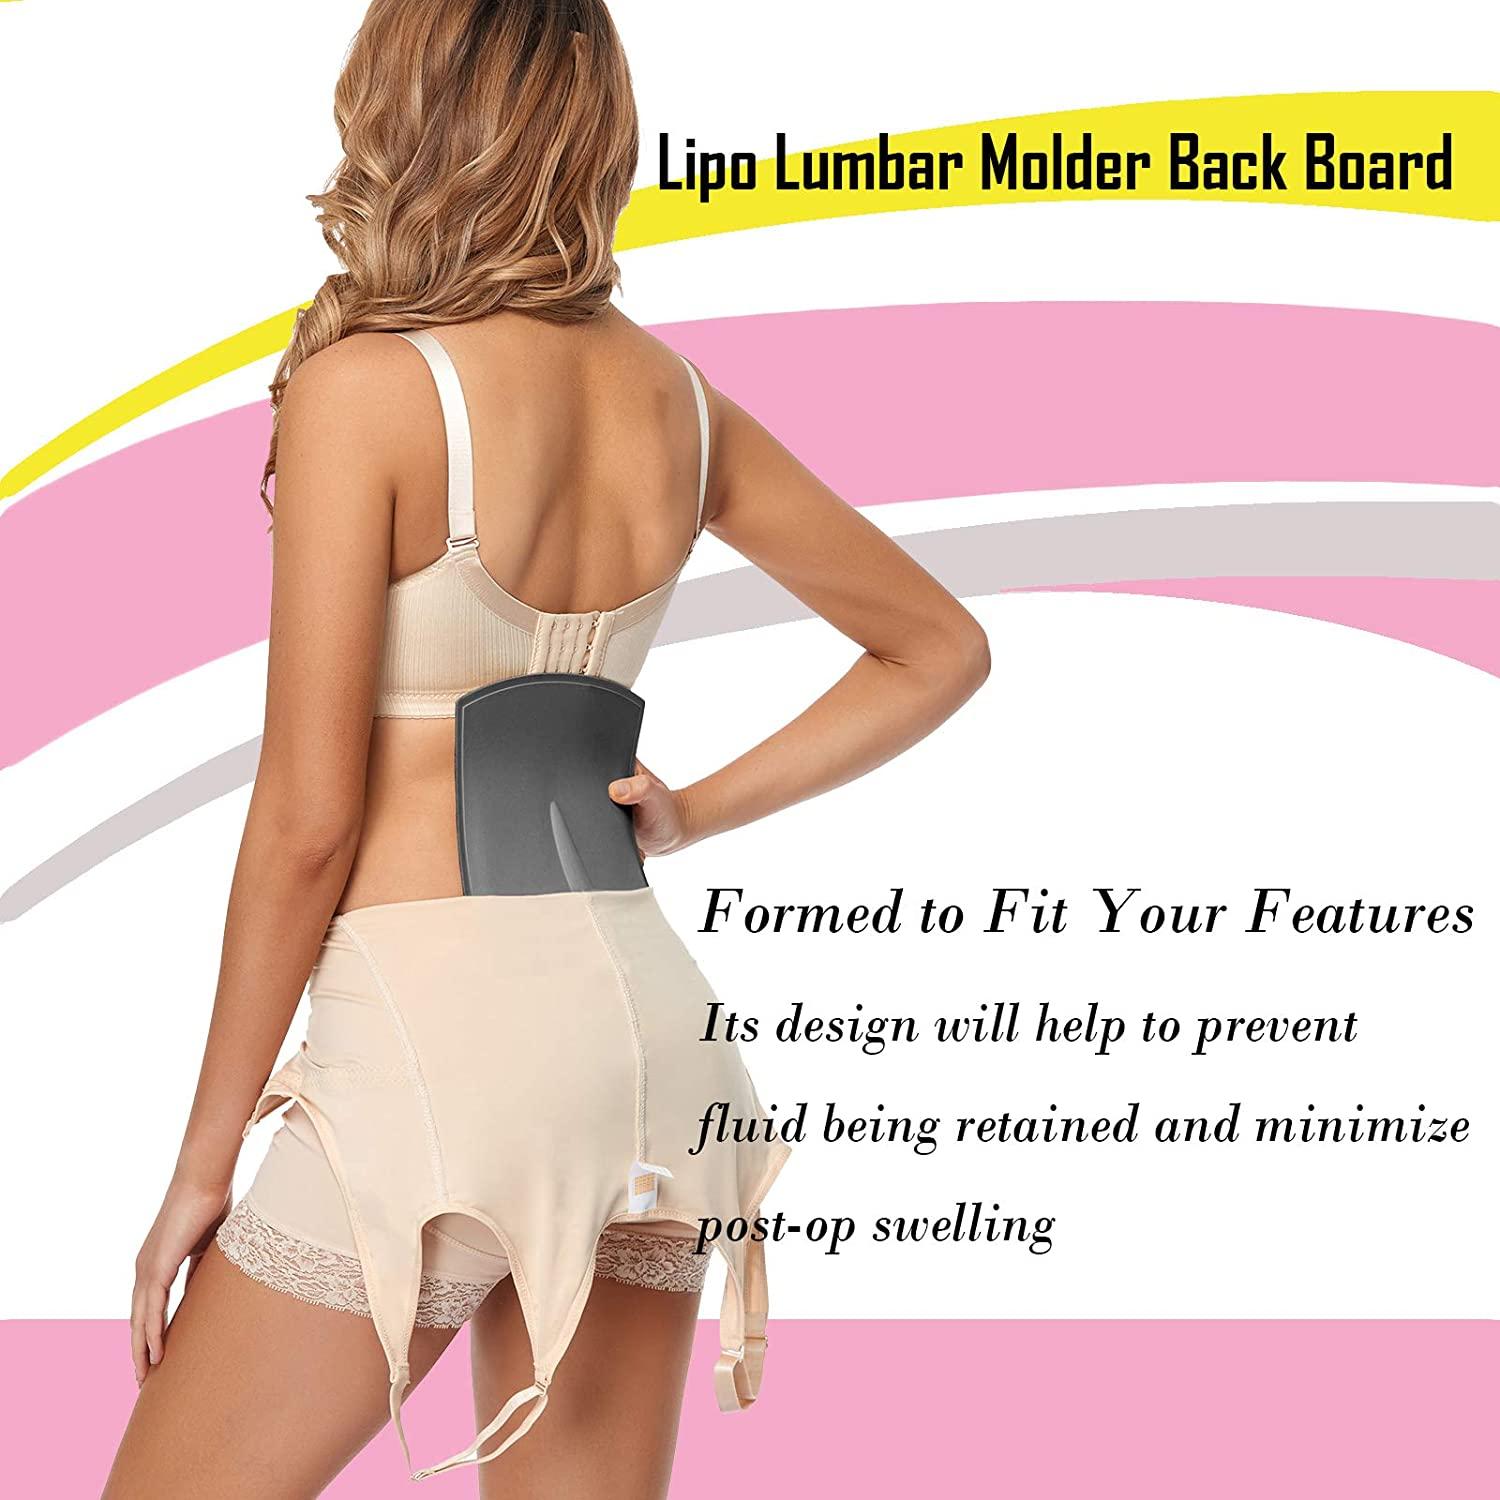 Lipo Foam Back Board, BBL Lumbar Molder